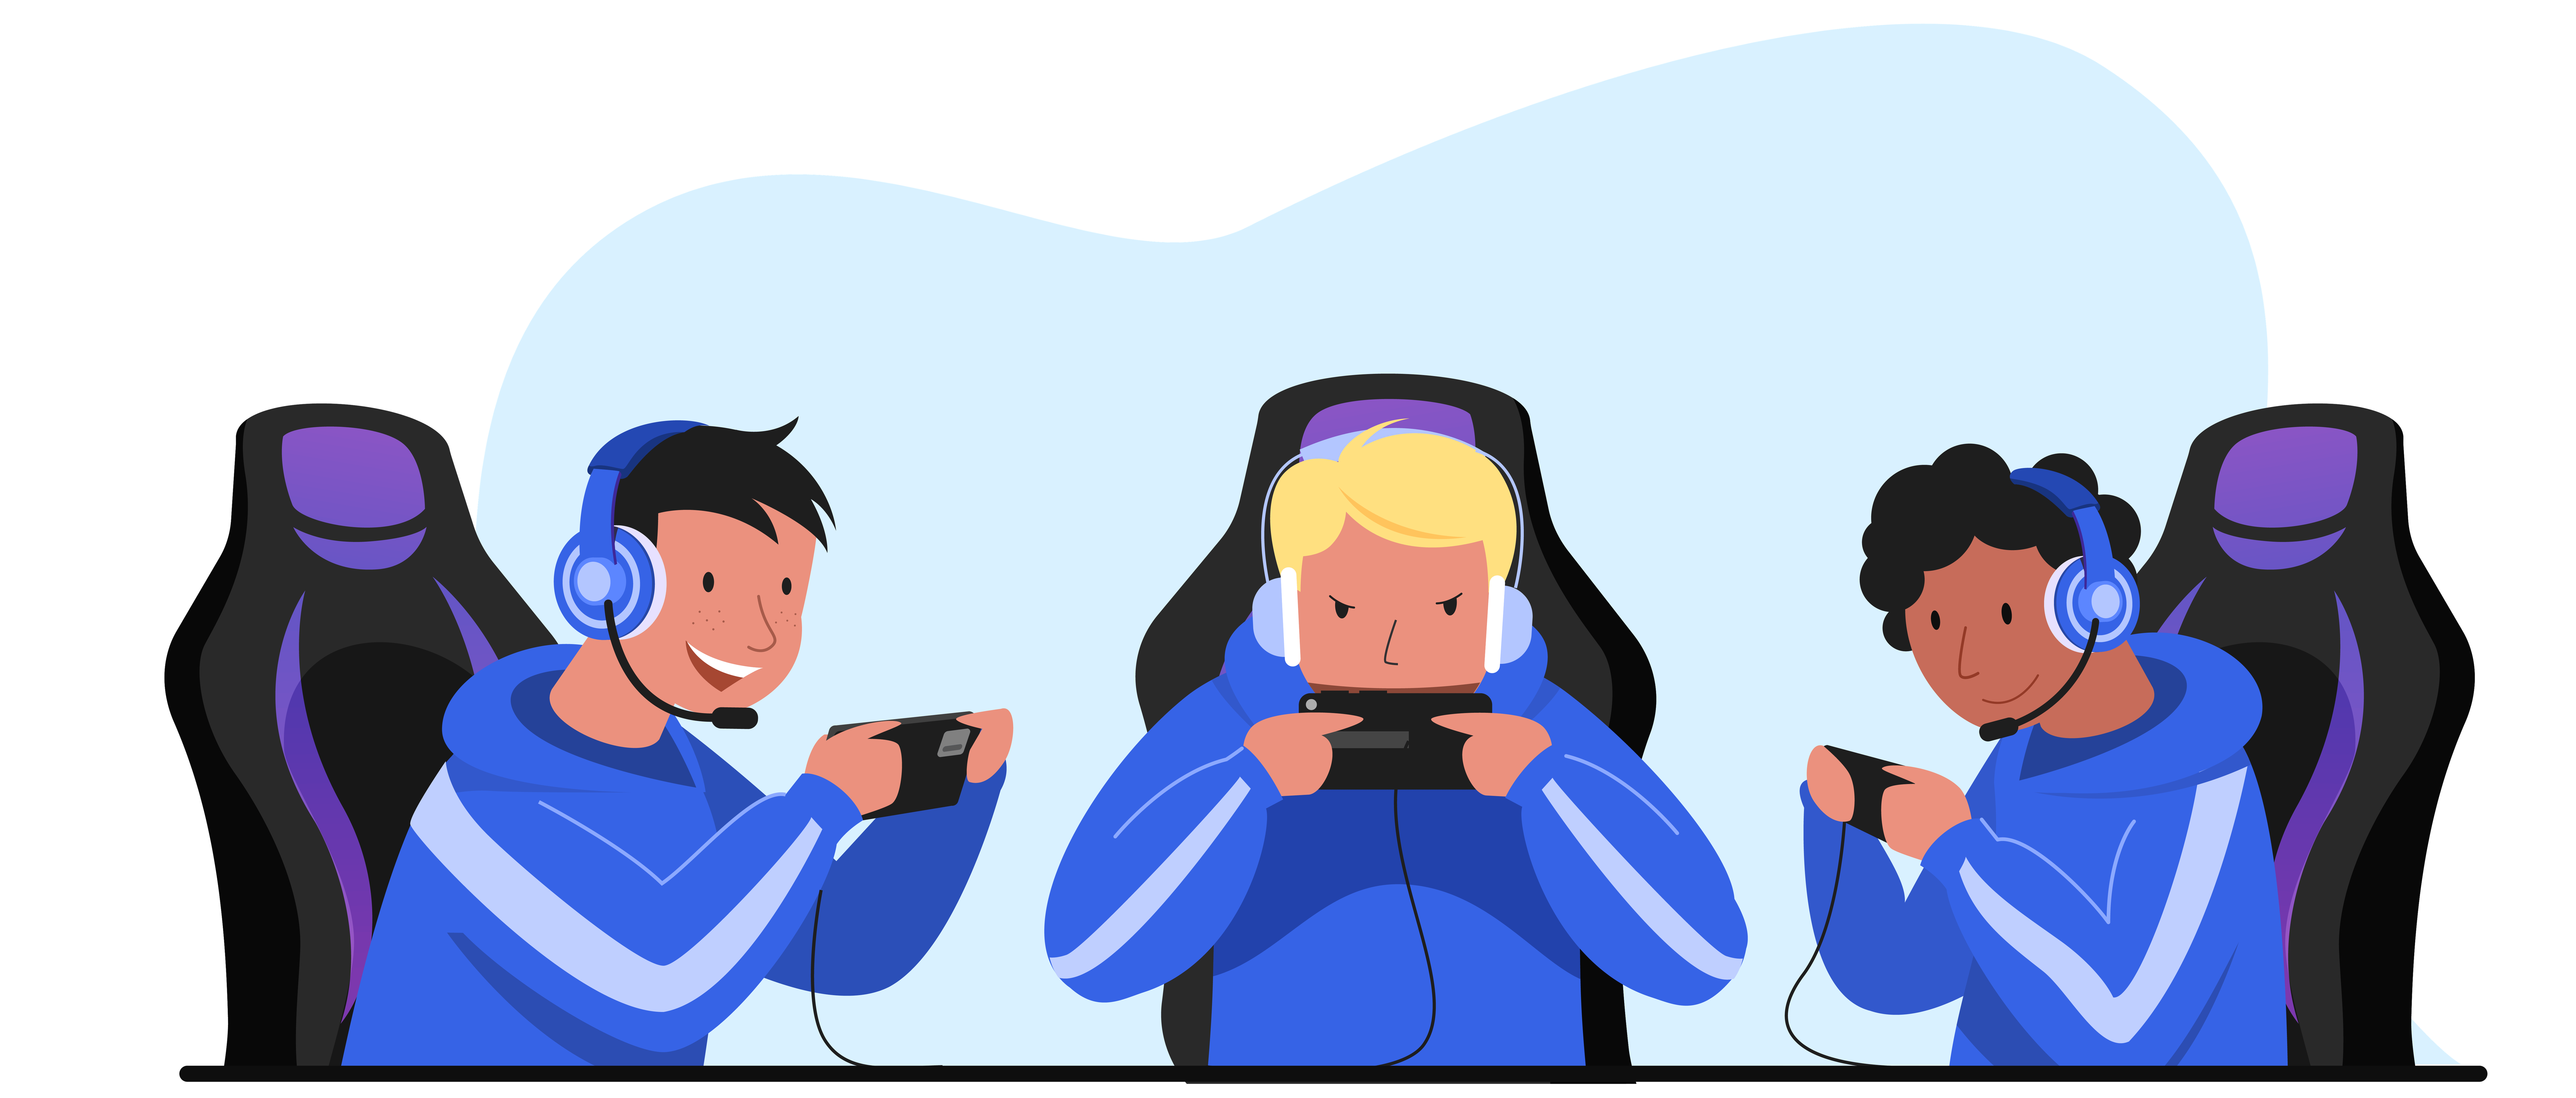 Illustration of 3 boys gaming